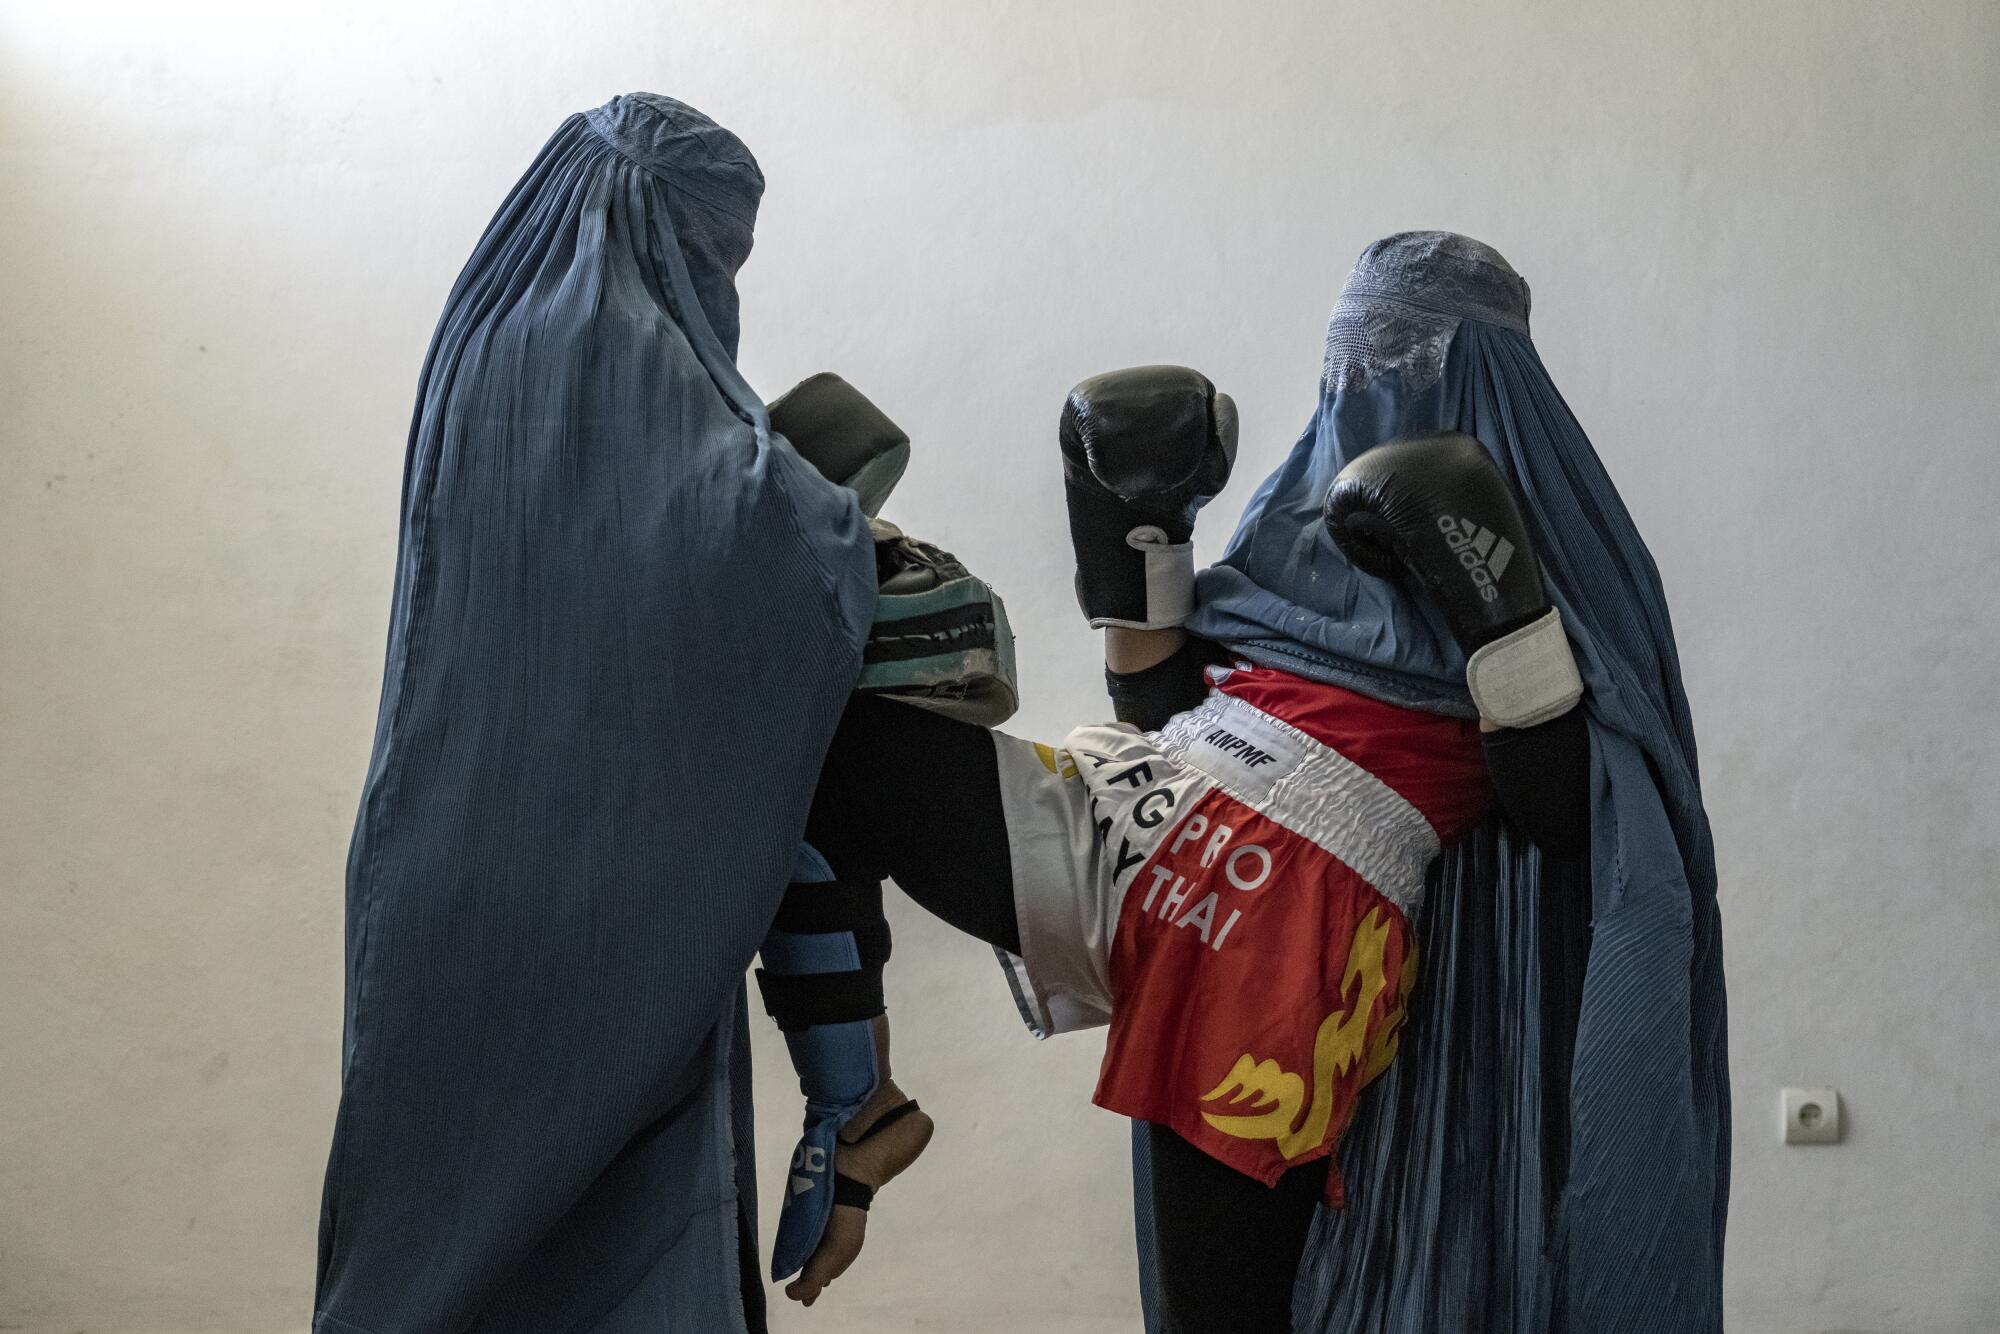 Afghan women box while wearing burqas.